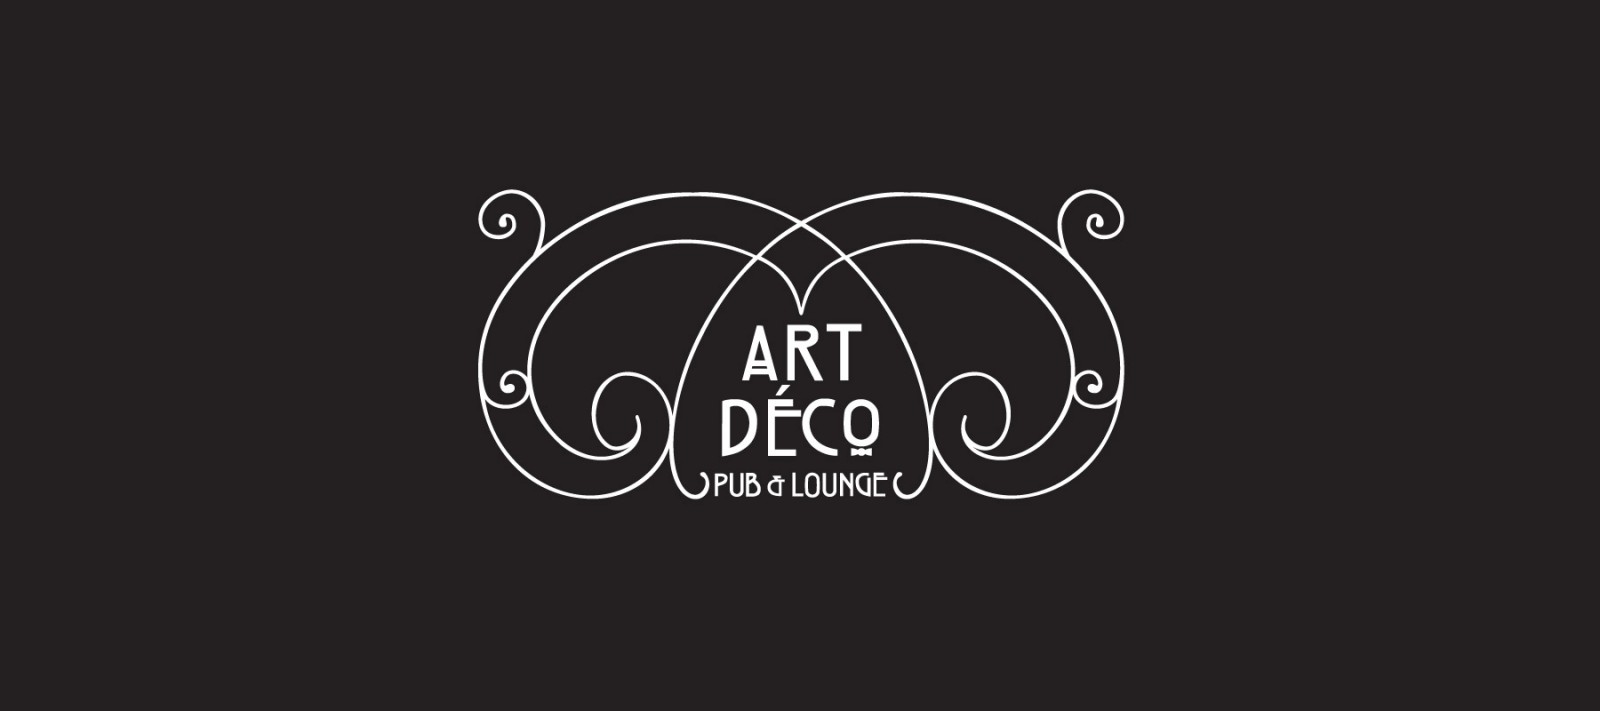 Art deco Logos